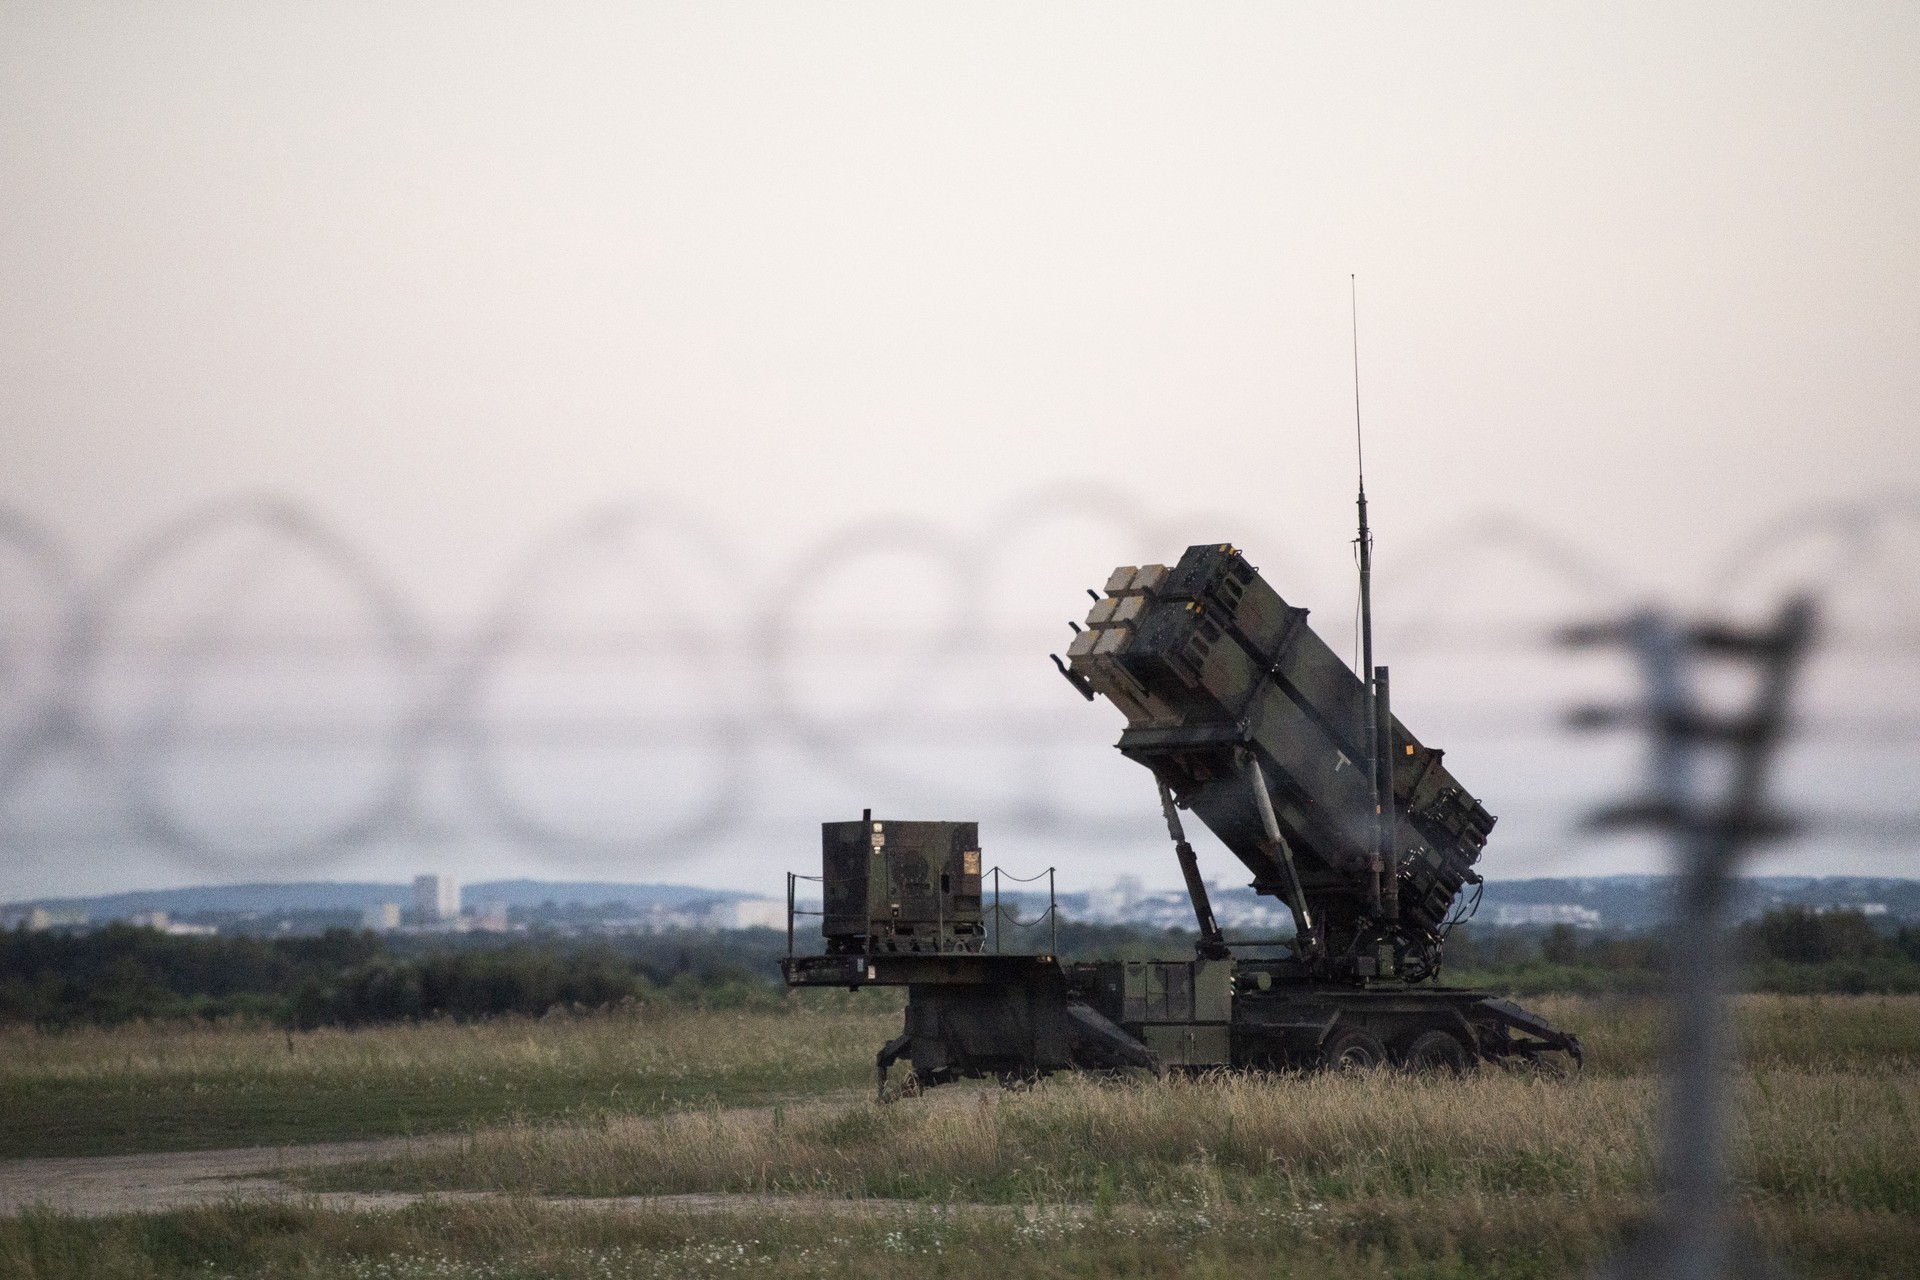 FT: НАТО и Евросоюз давят на Испанию и Грецию из-за передачи Украине систем ПВО